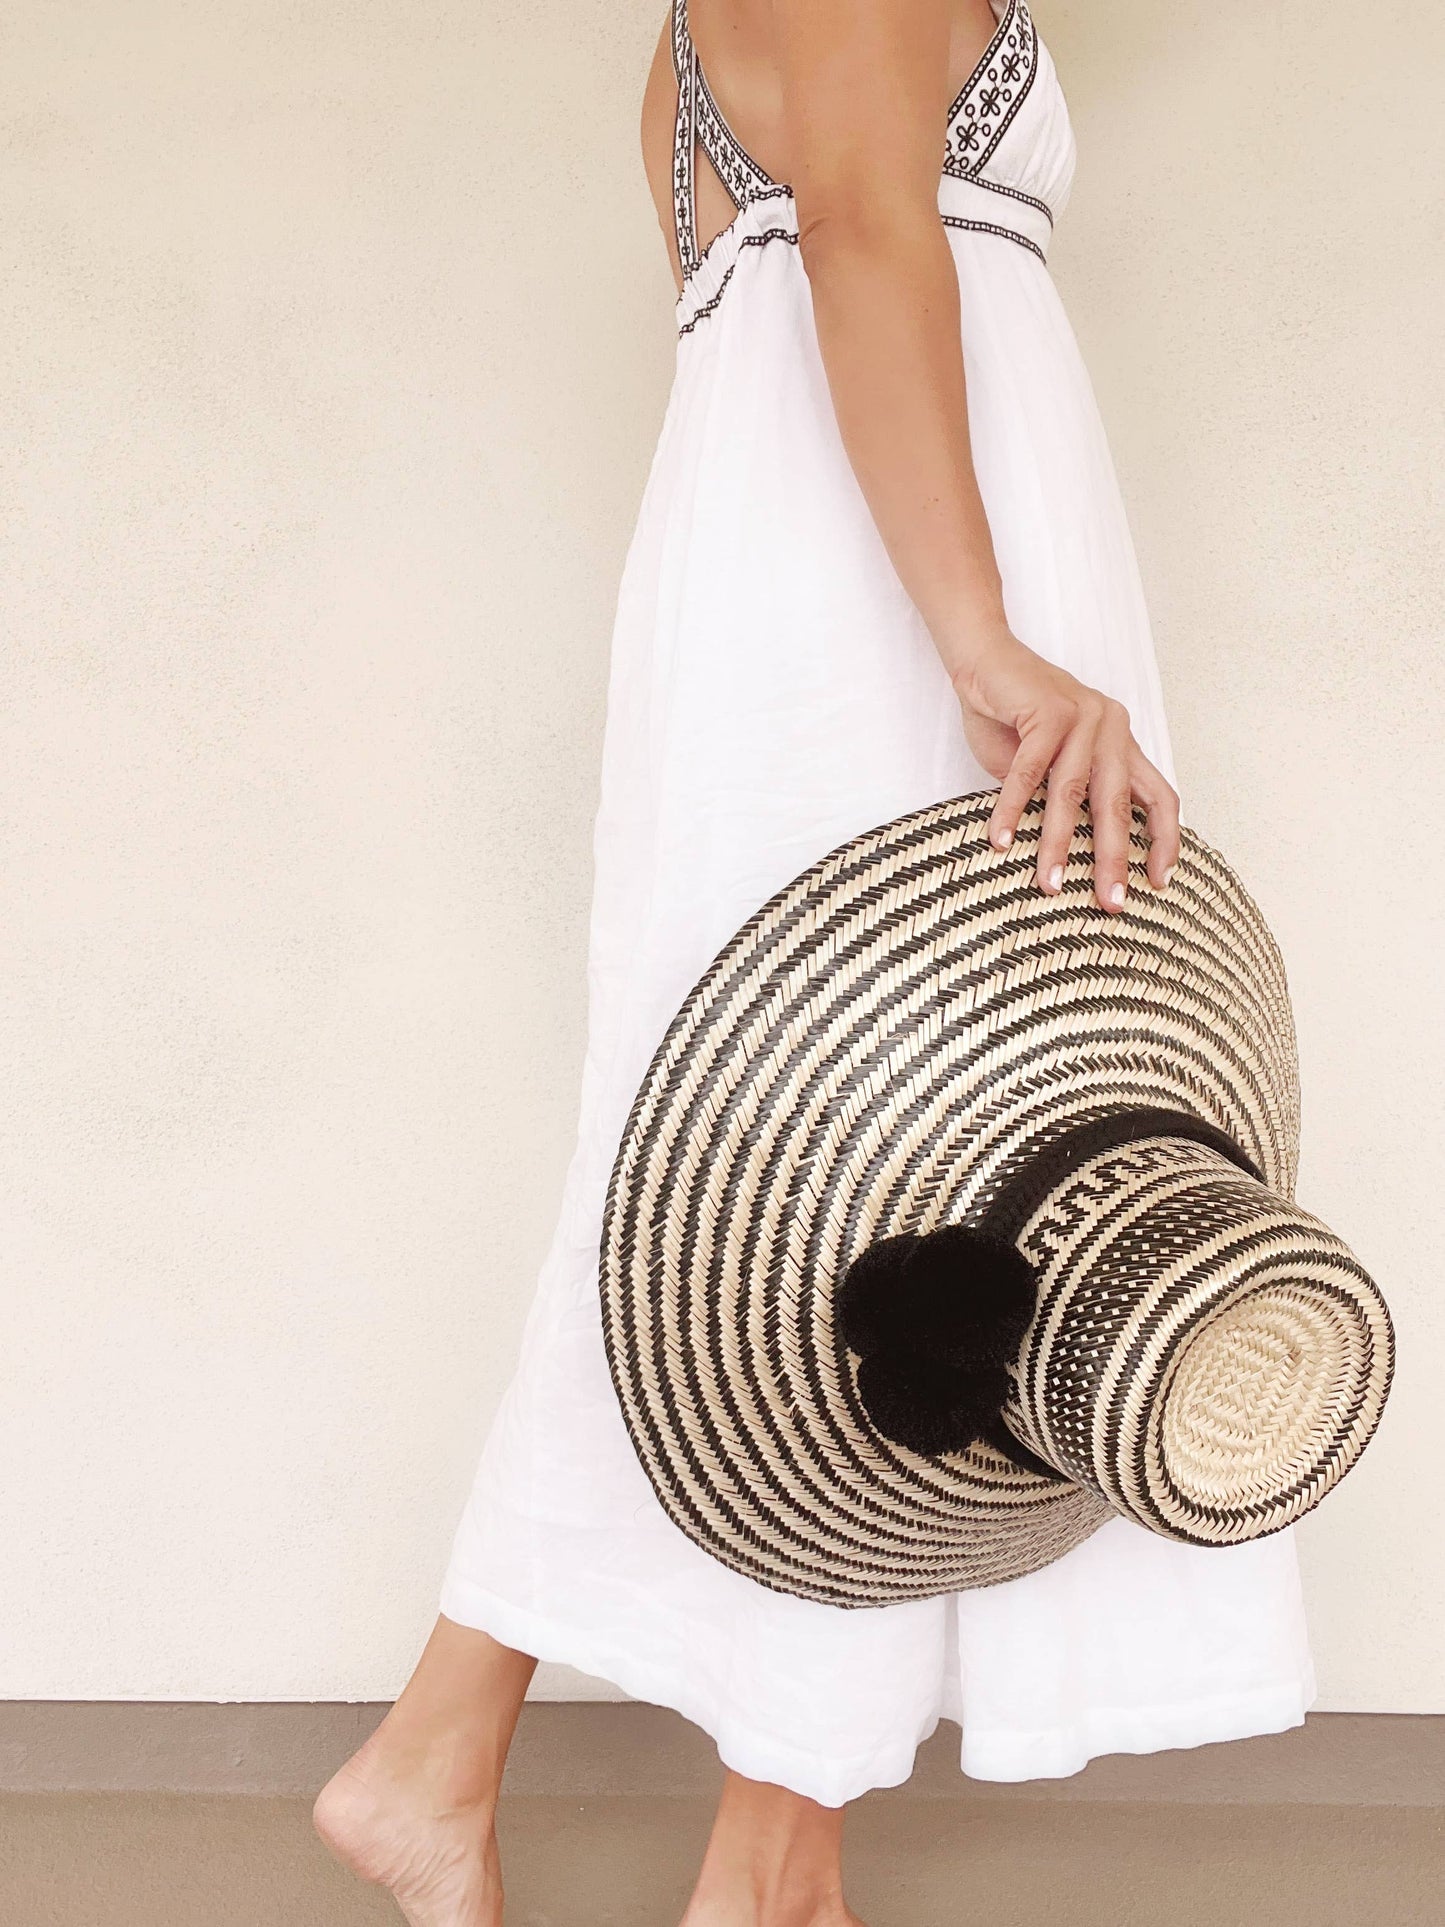 the good flair - classic sun hat - handmade - sustainable